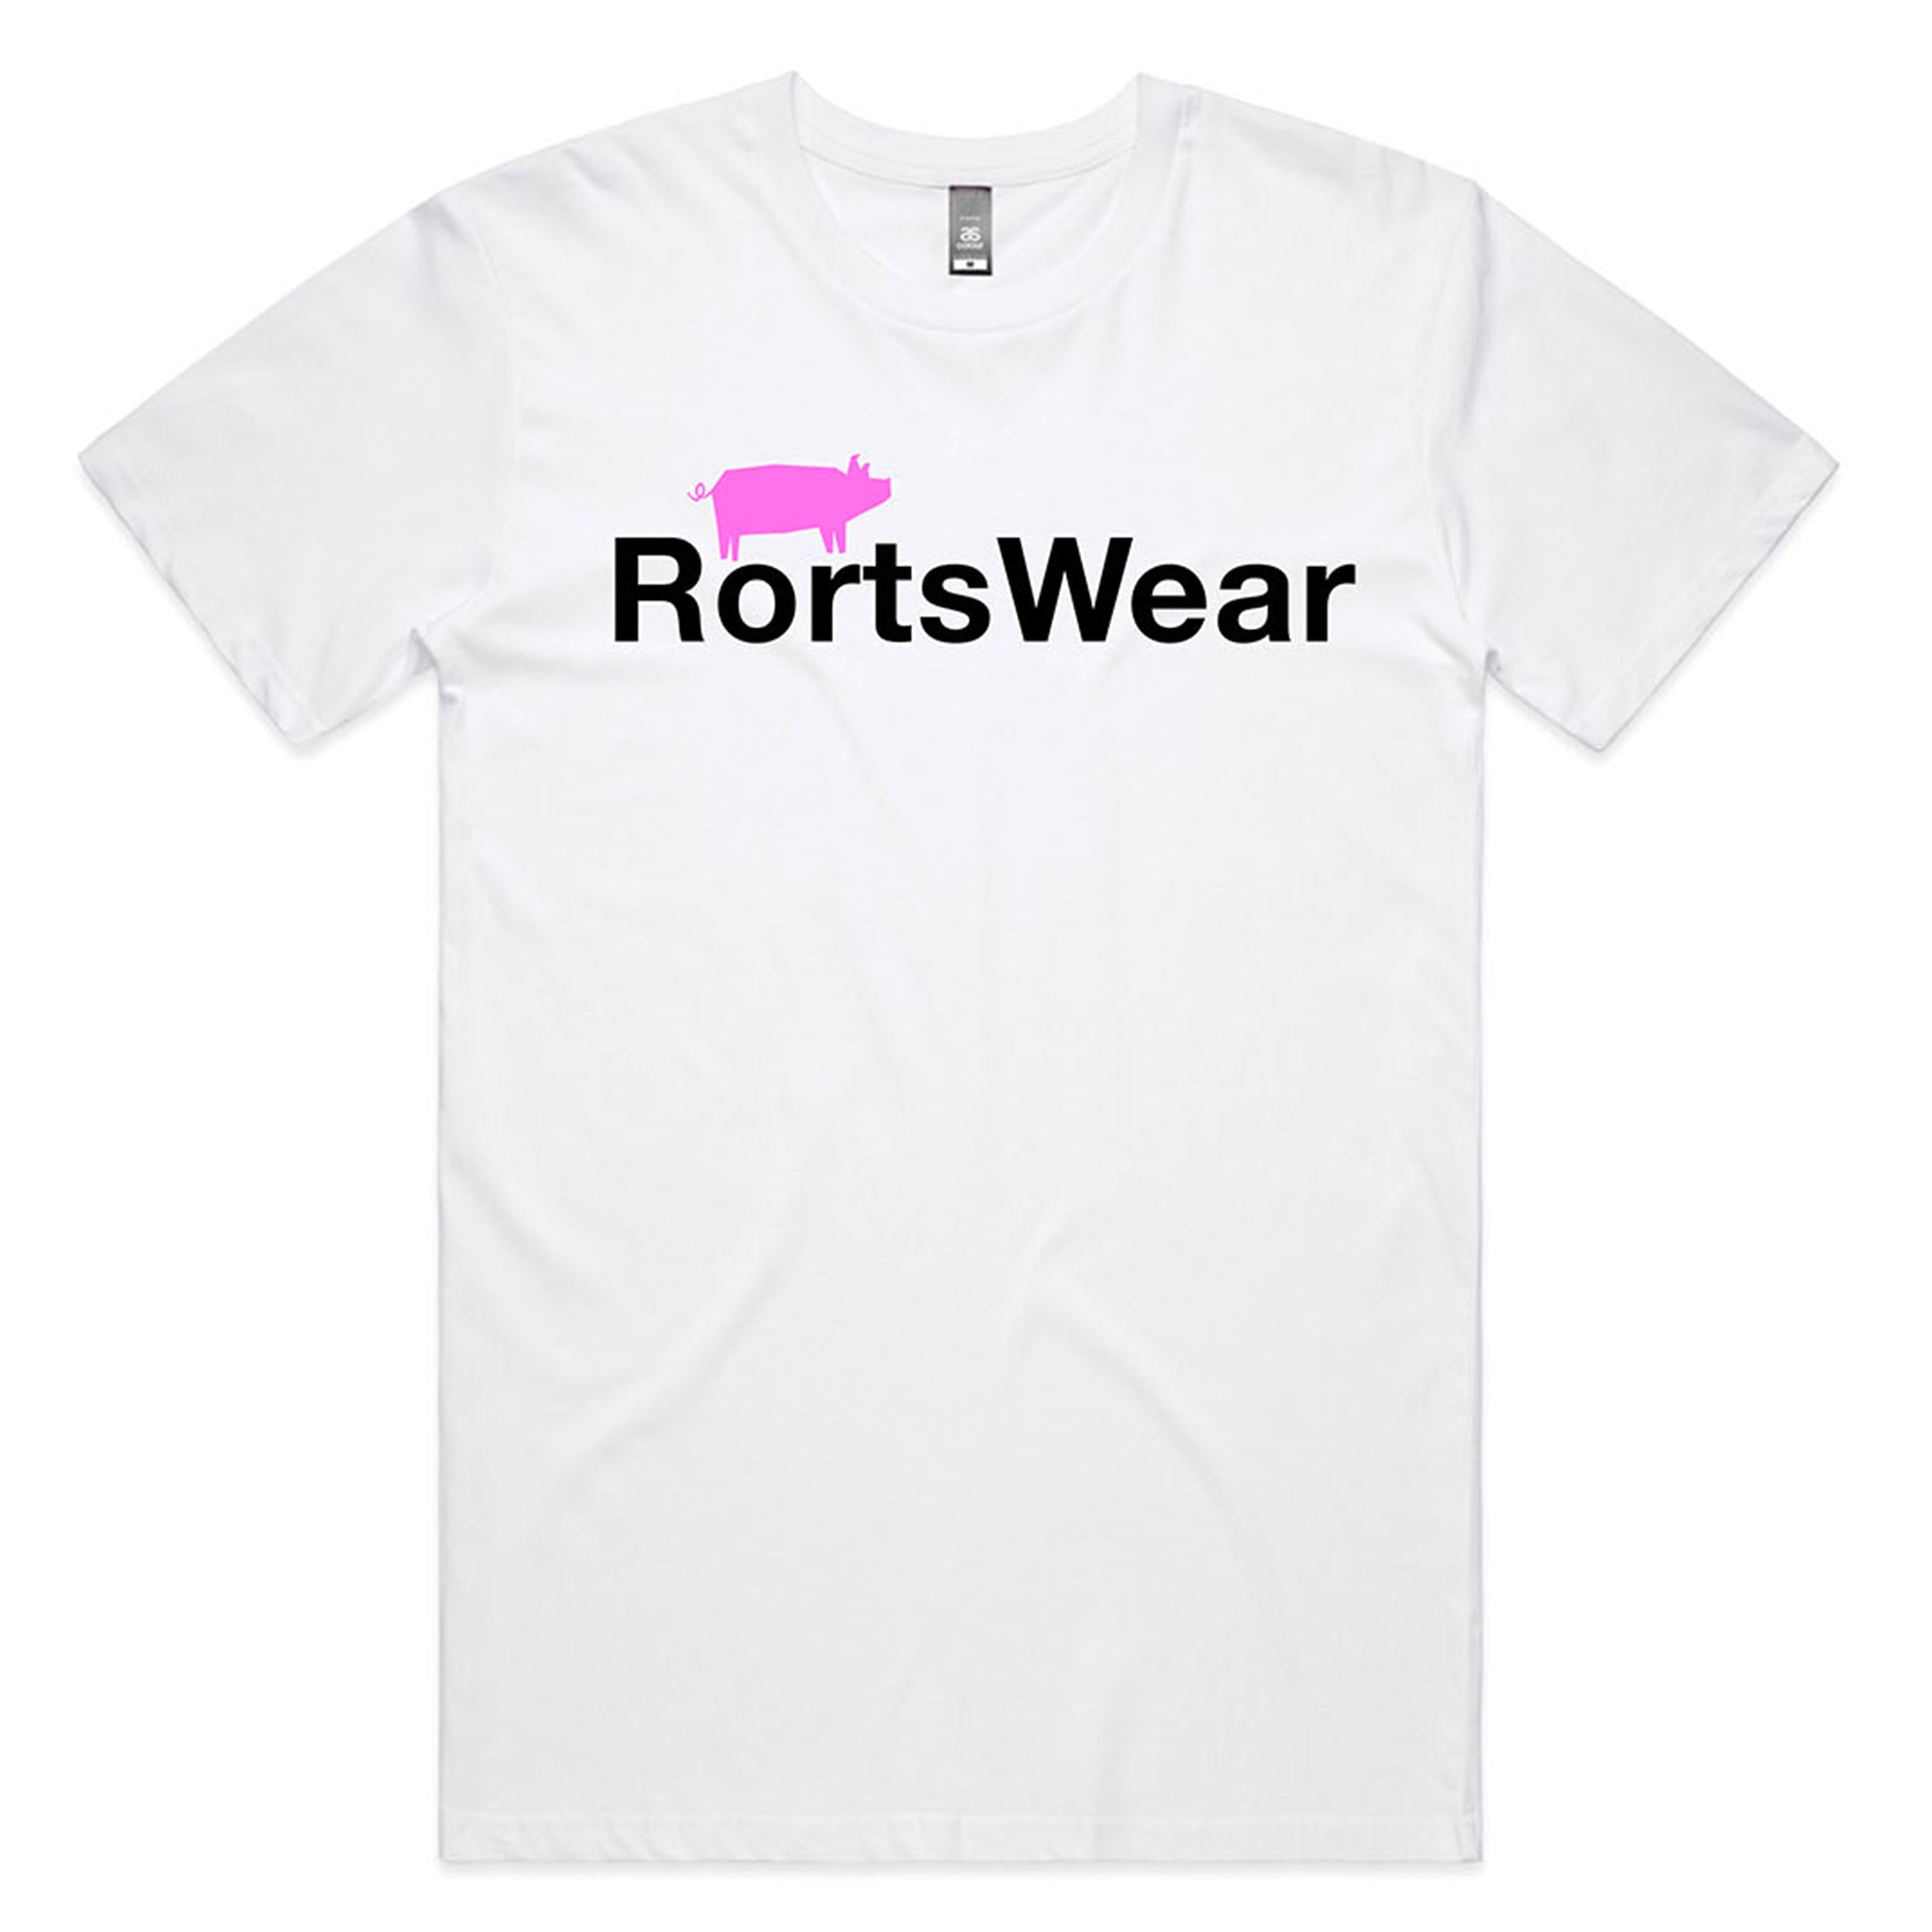 Rortswear Text Tee